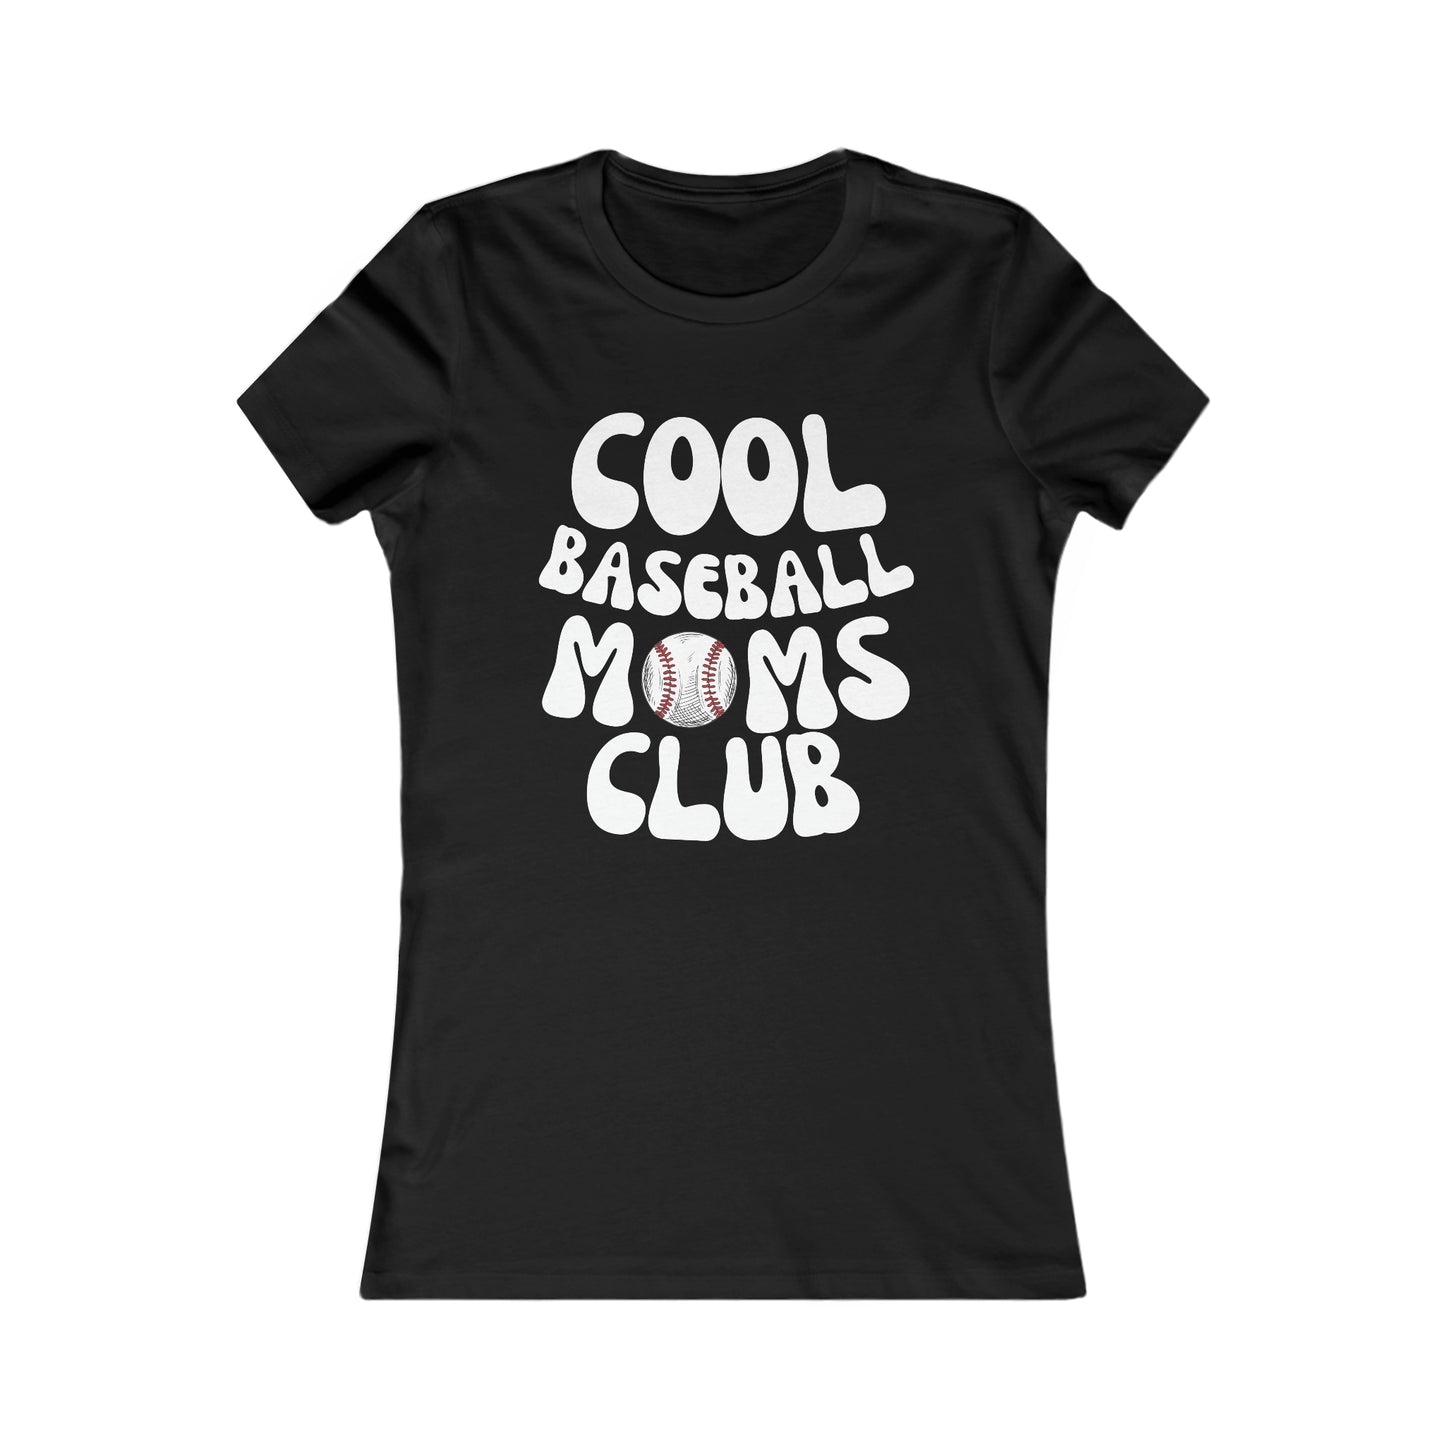 Cool Baseball Mom's Club - Women's Favorite Tee